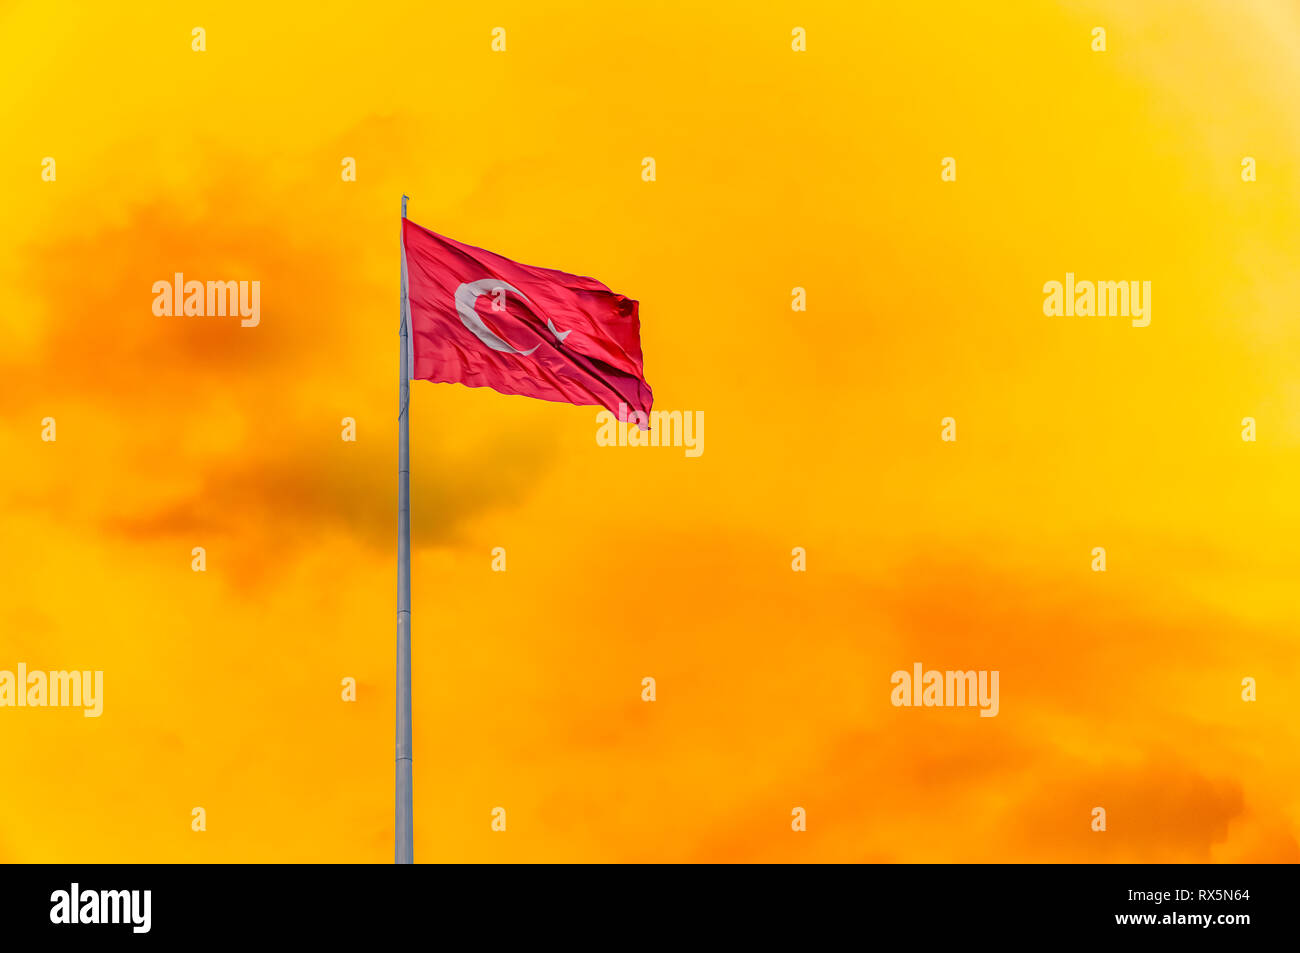 Turkish flag waving in orange color sky. Stock Photo